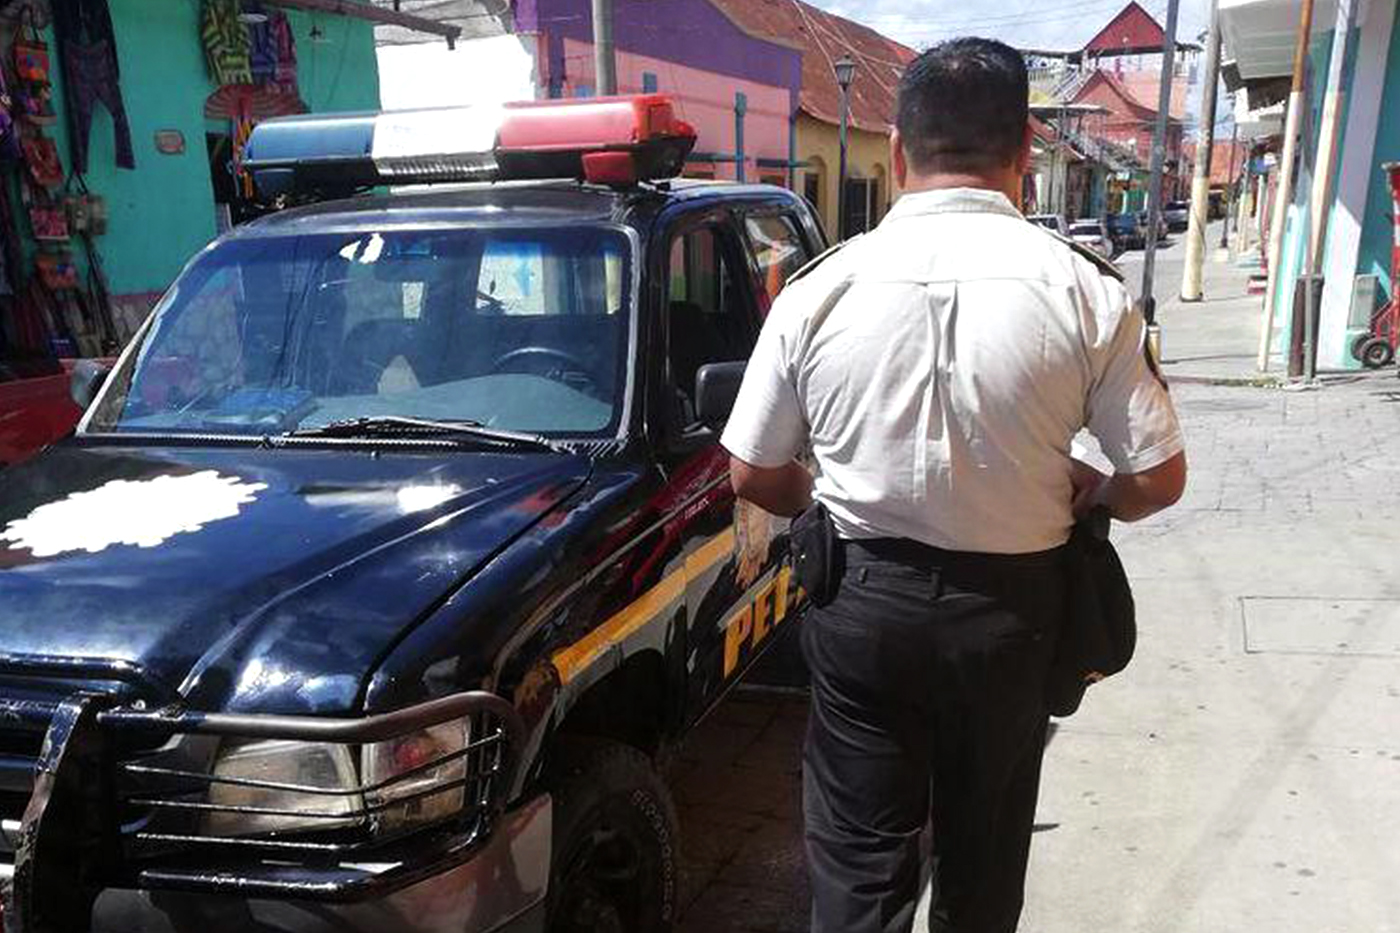 Guatemala politieman